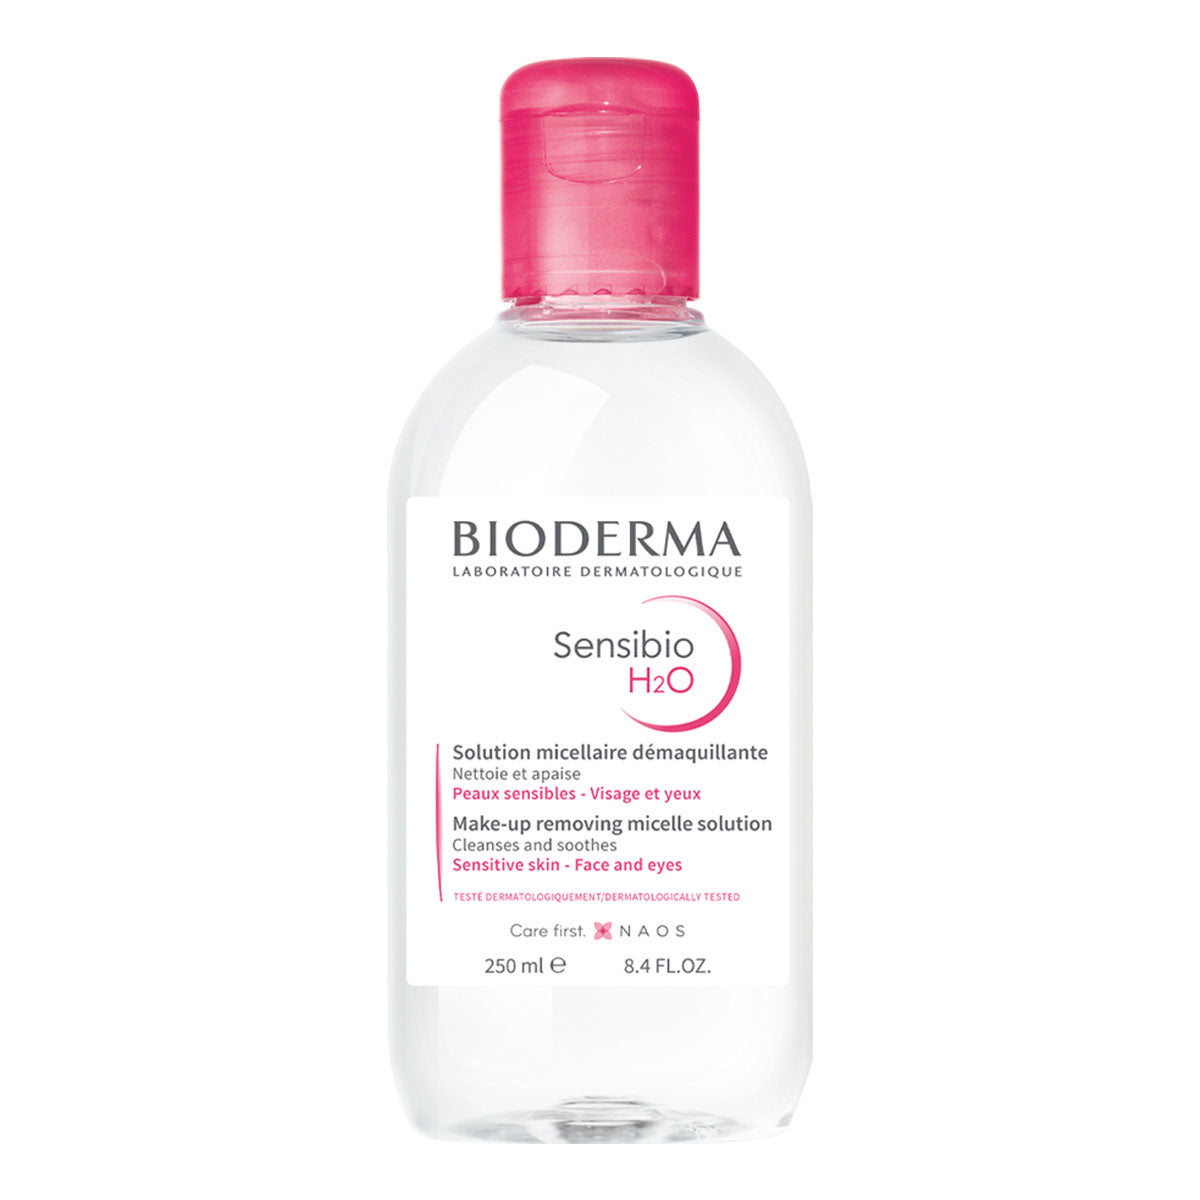 Bioderma Sensibio H2O, Agua micelar desmaquillante para piel sensible, 250ml